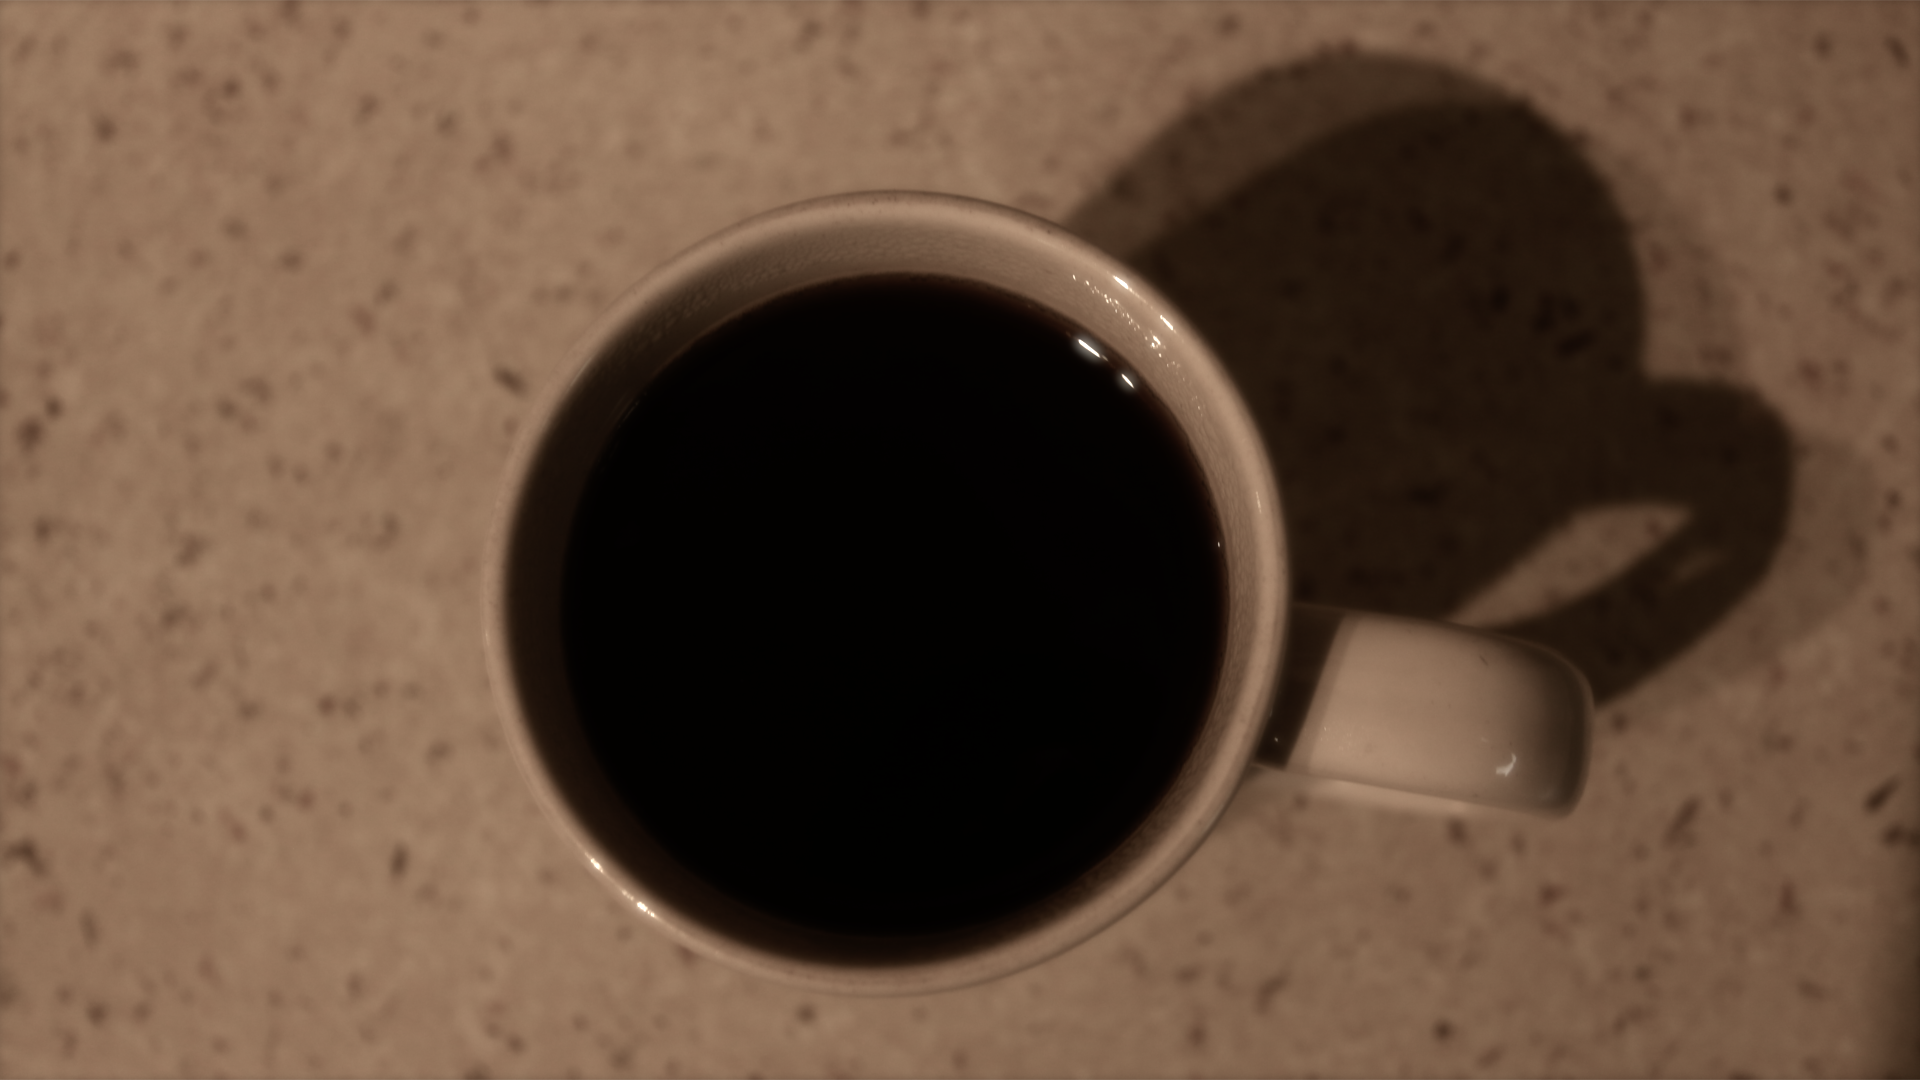 A white coffee mug with black coffee